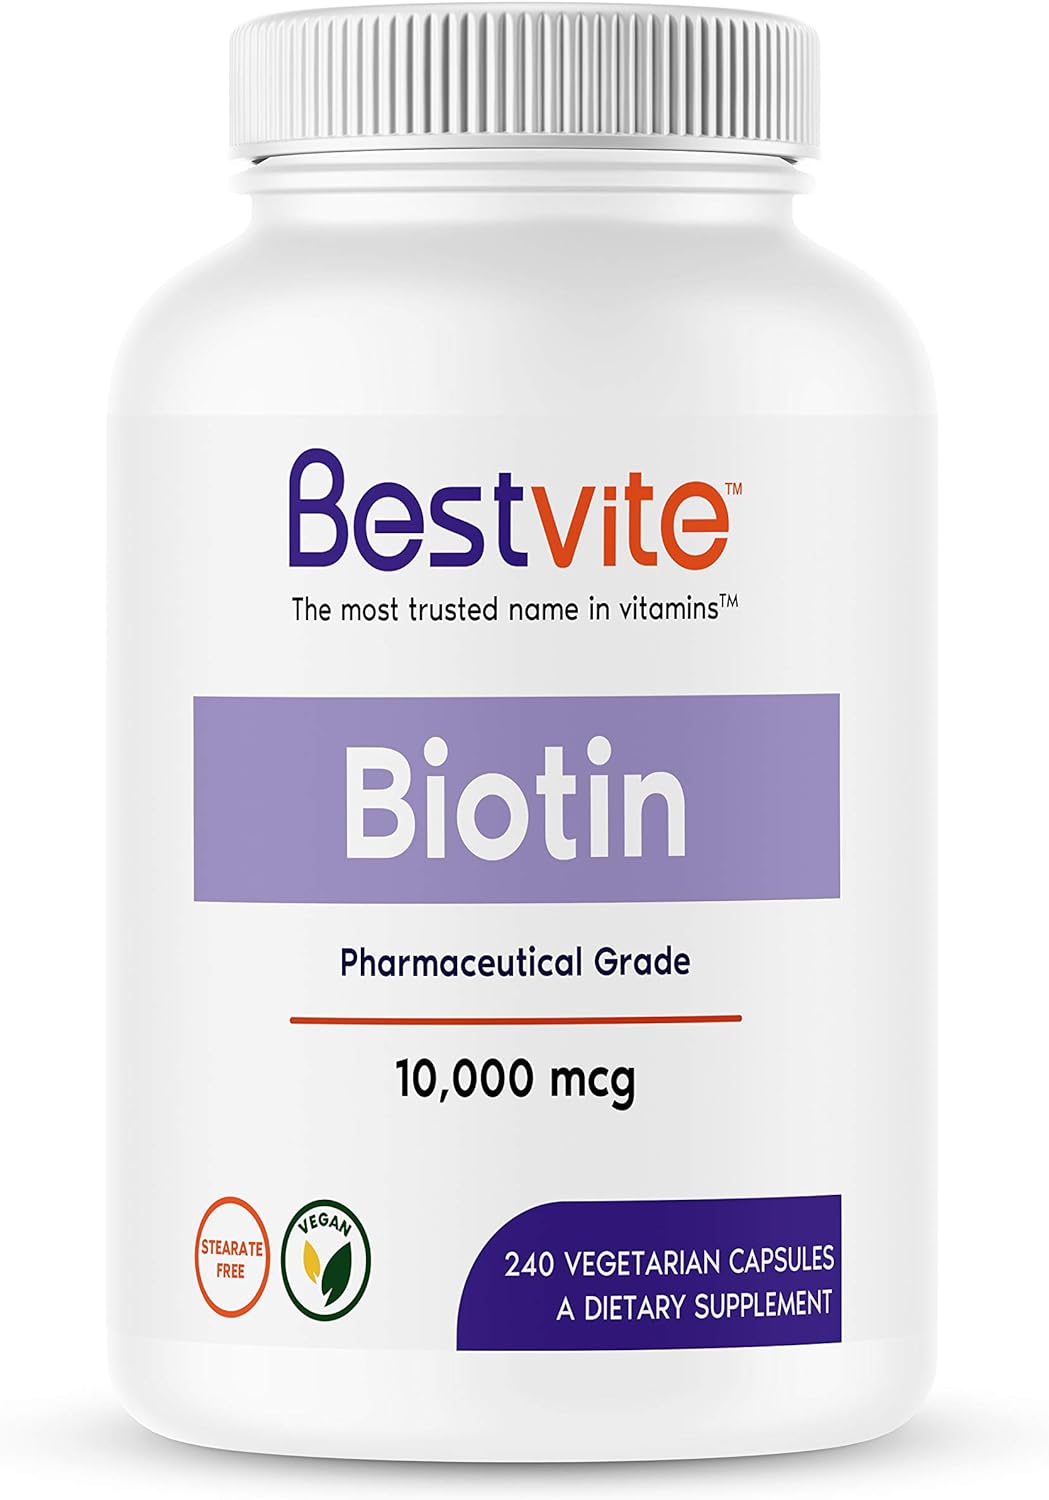 BESTVITE Biotin 10,000mcg (240 Vegetarian Capsules) - No Stearates - N